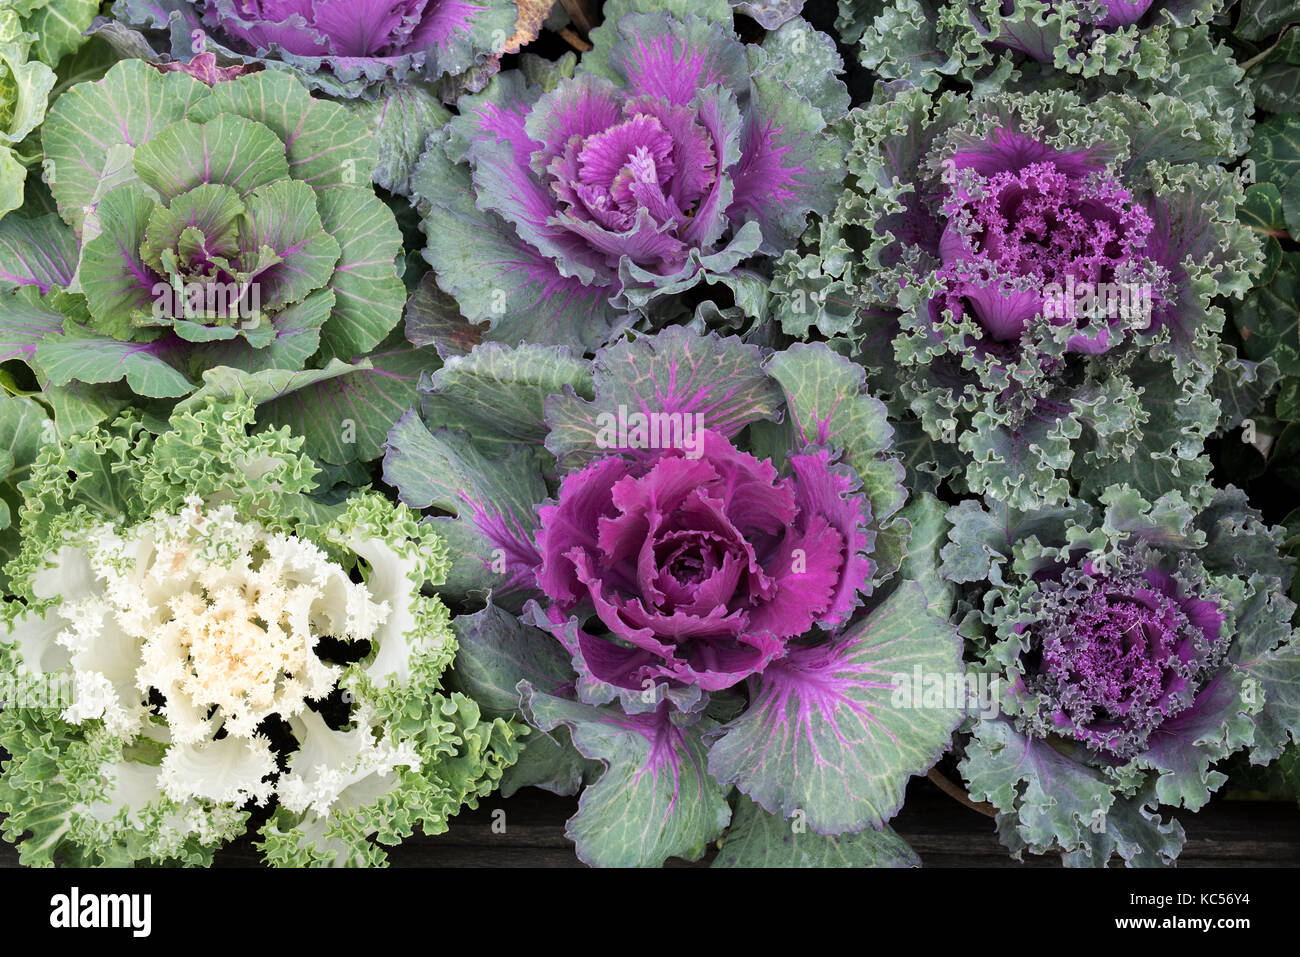 Brassica oleracea. Ornamental Cabbages Stock Photo